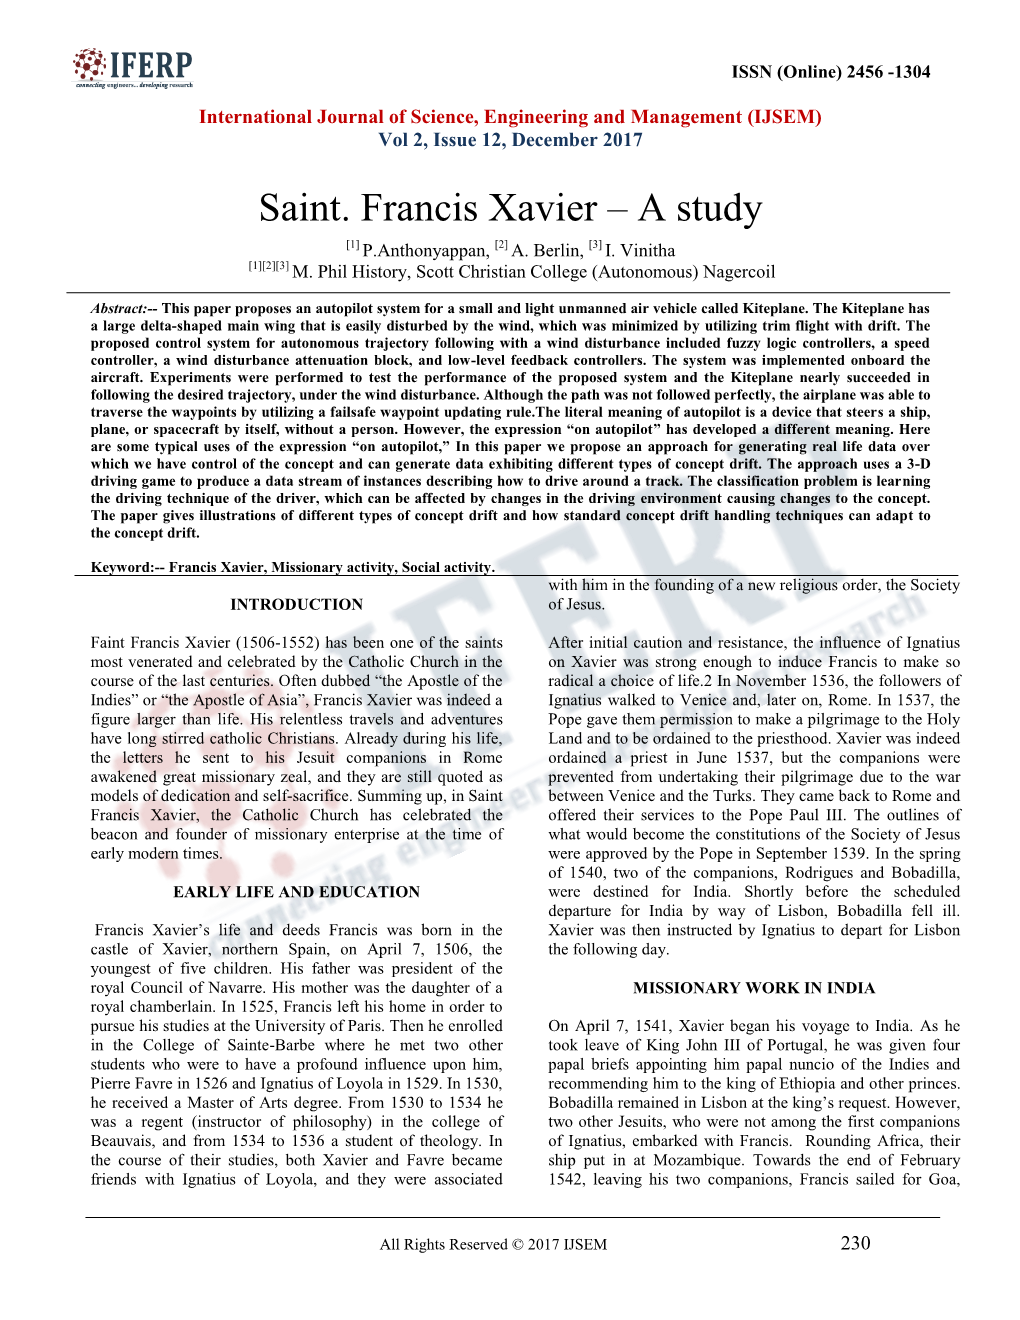 Saint. Francis Xavier – a Study [1] P.Anthonyappan, [2] A